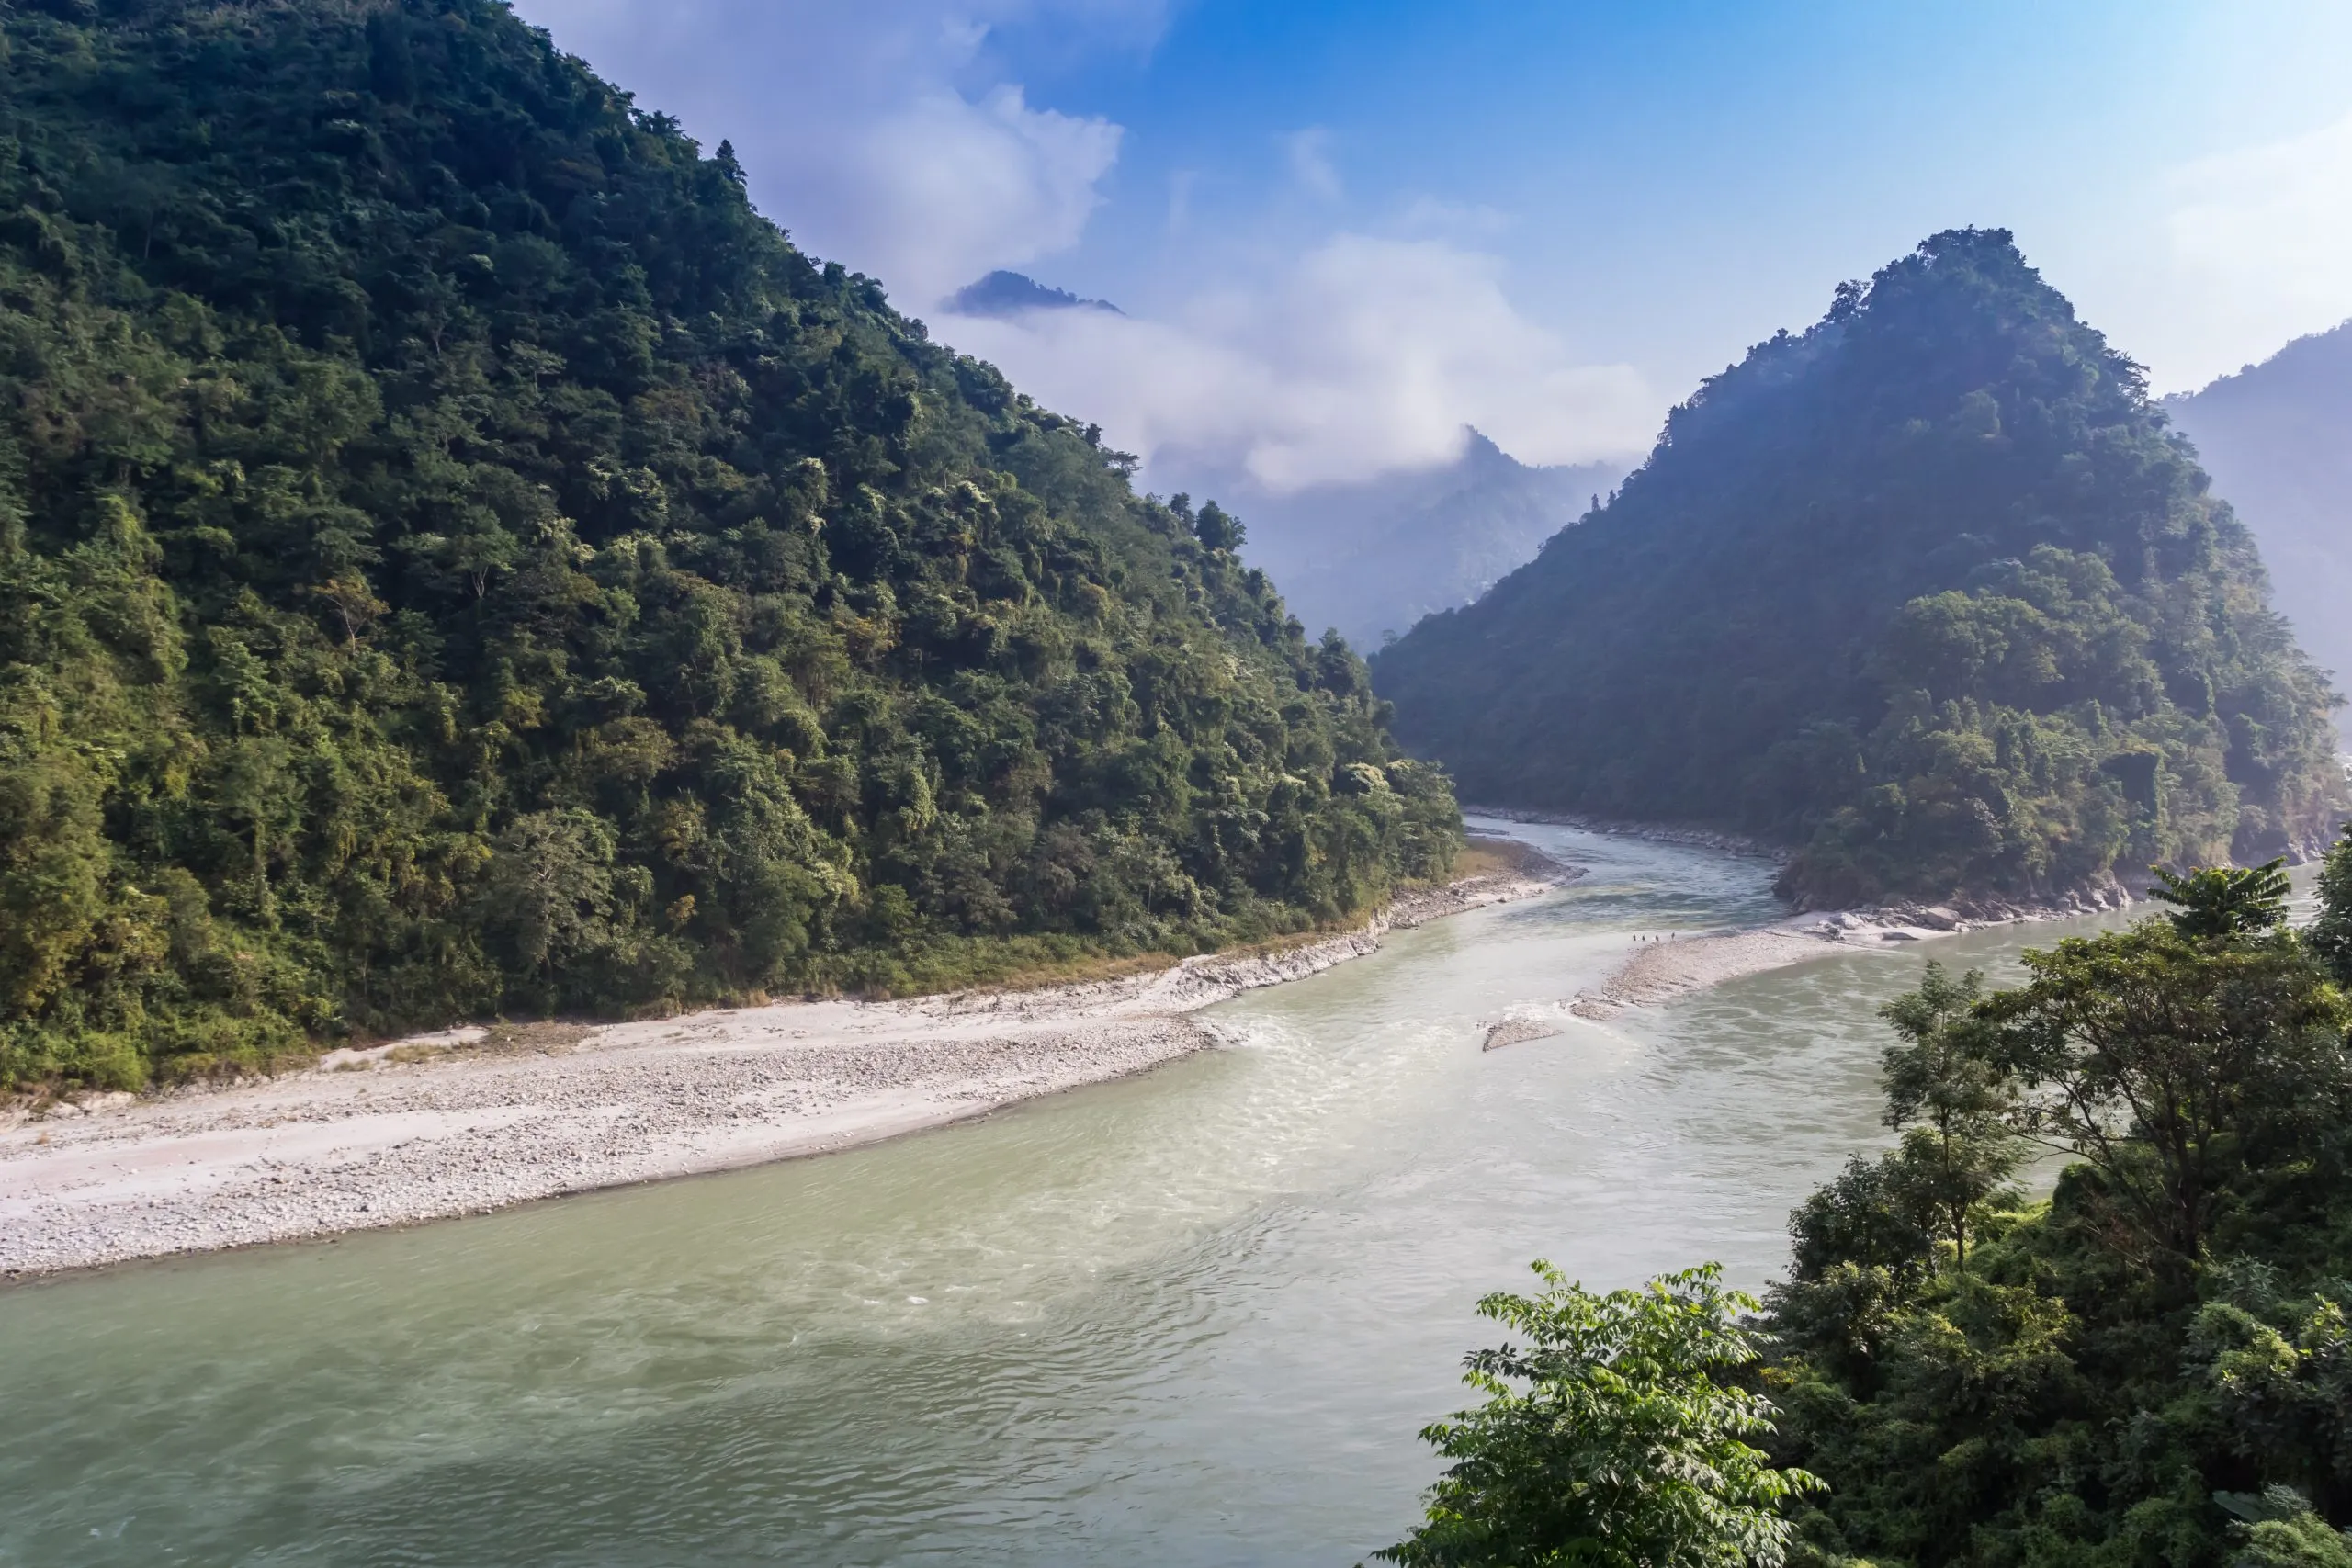 View over the Trishuli river near Pokhara, Nepal